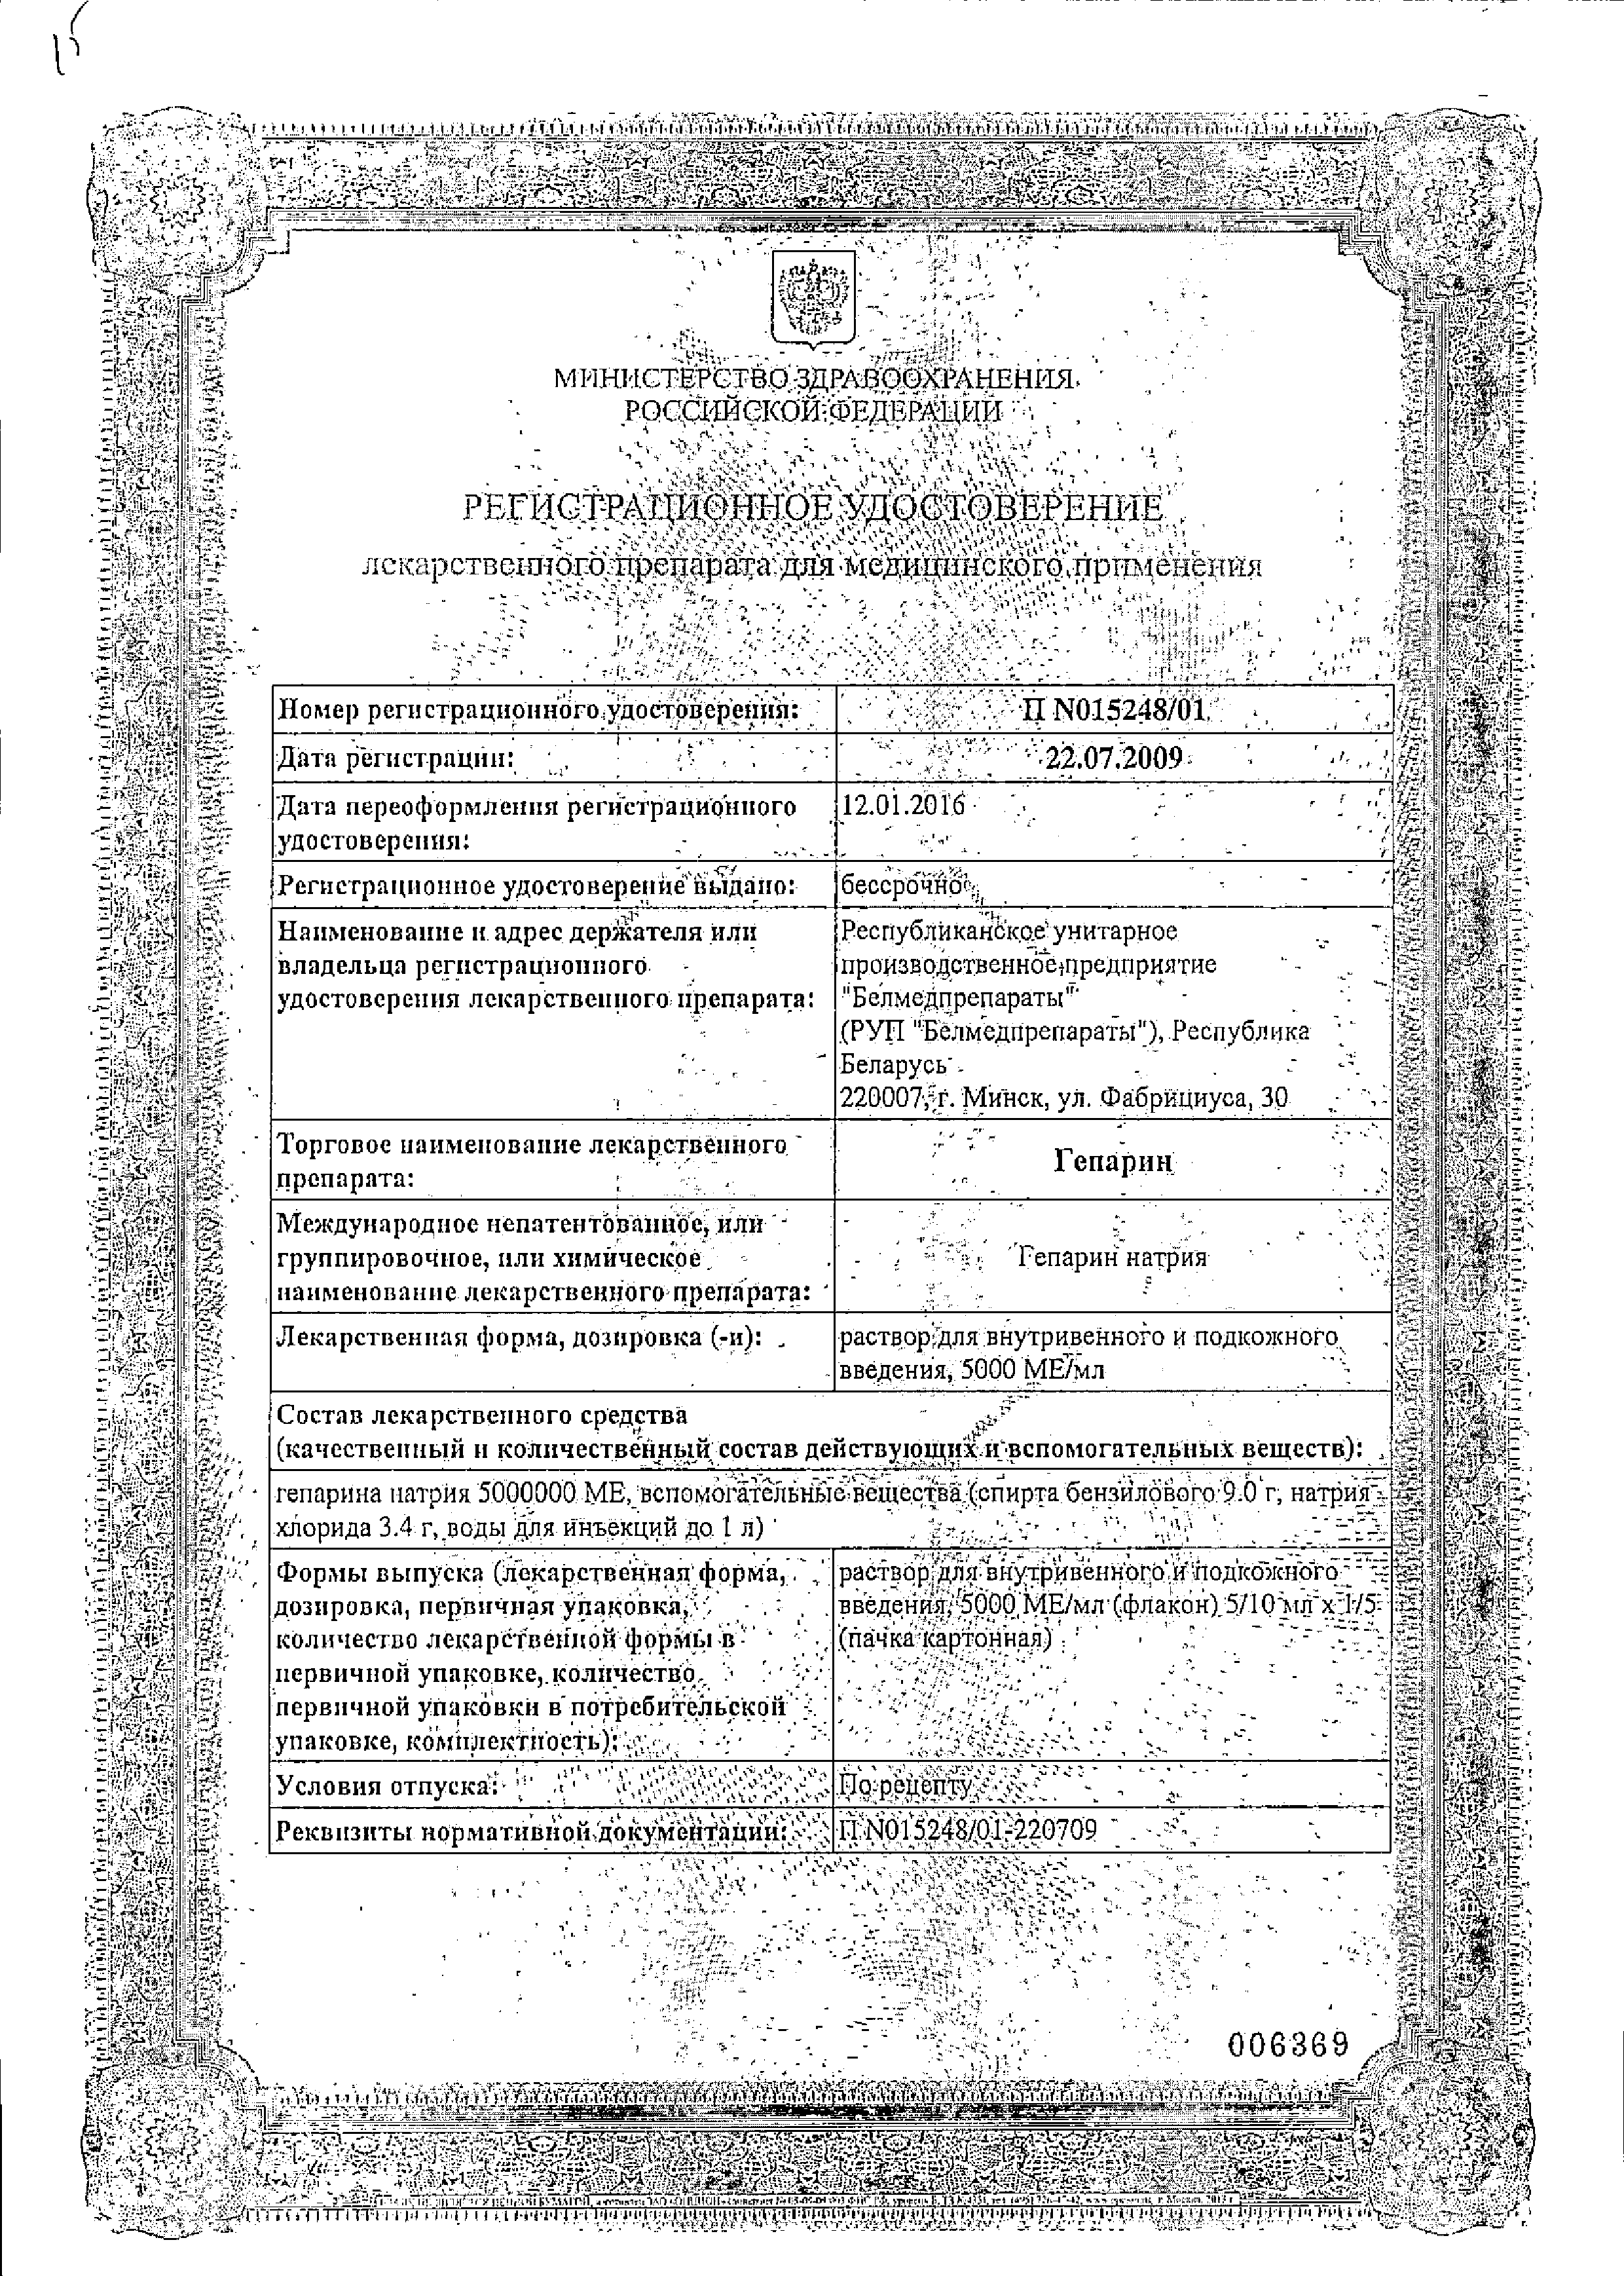 Гепарин сертификат